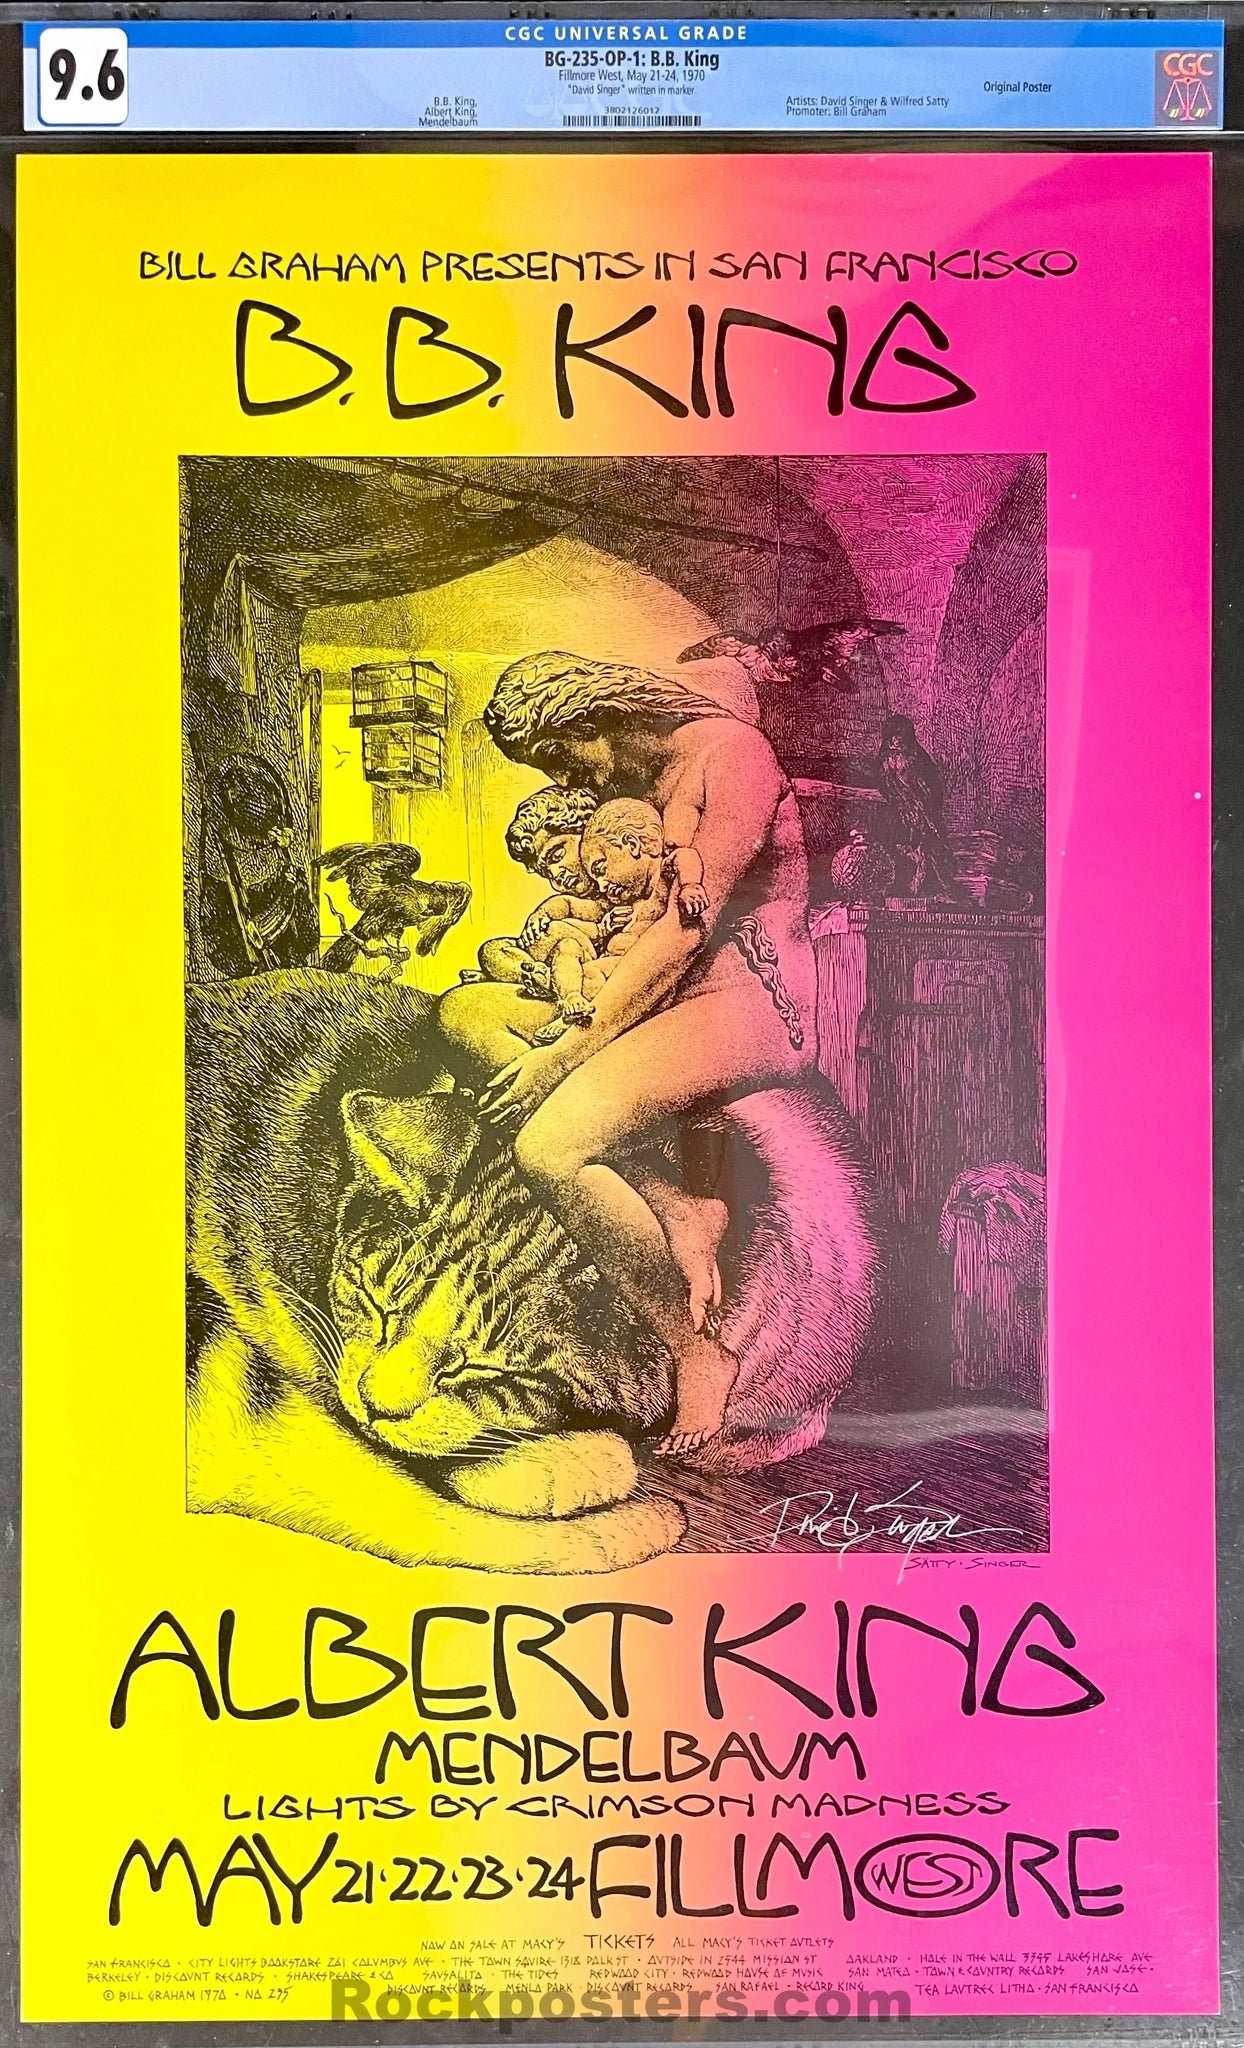 AUCTION - BG-235 - B.B. King Poster - David Singer Signed - Fillmore West - 1968 Poster - CGC Graded 9.6